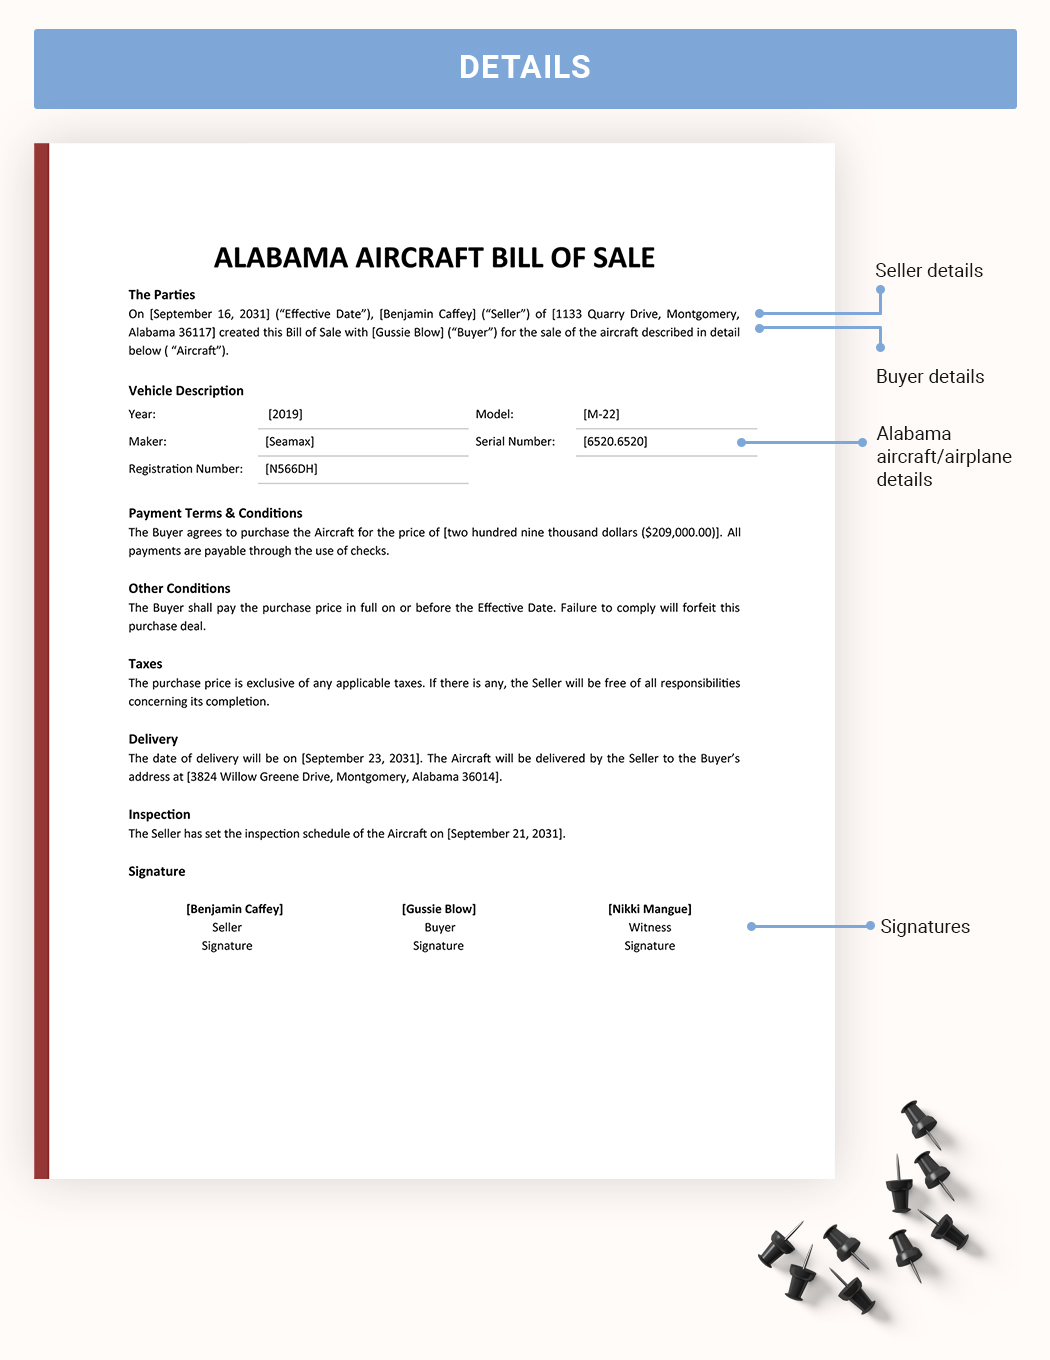 Alabama Aircraft / Airplane Bill Of Sale Template